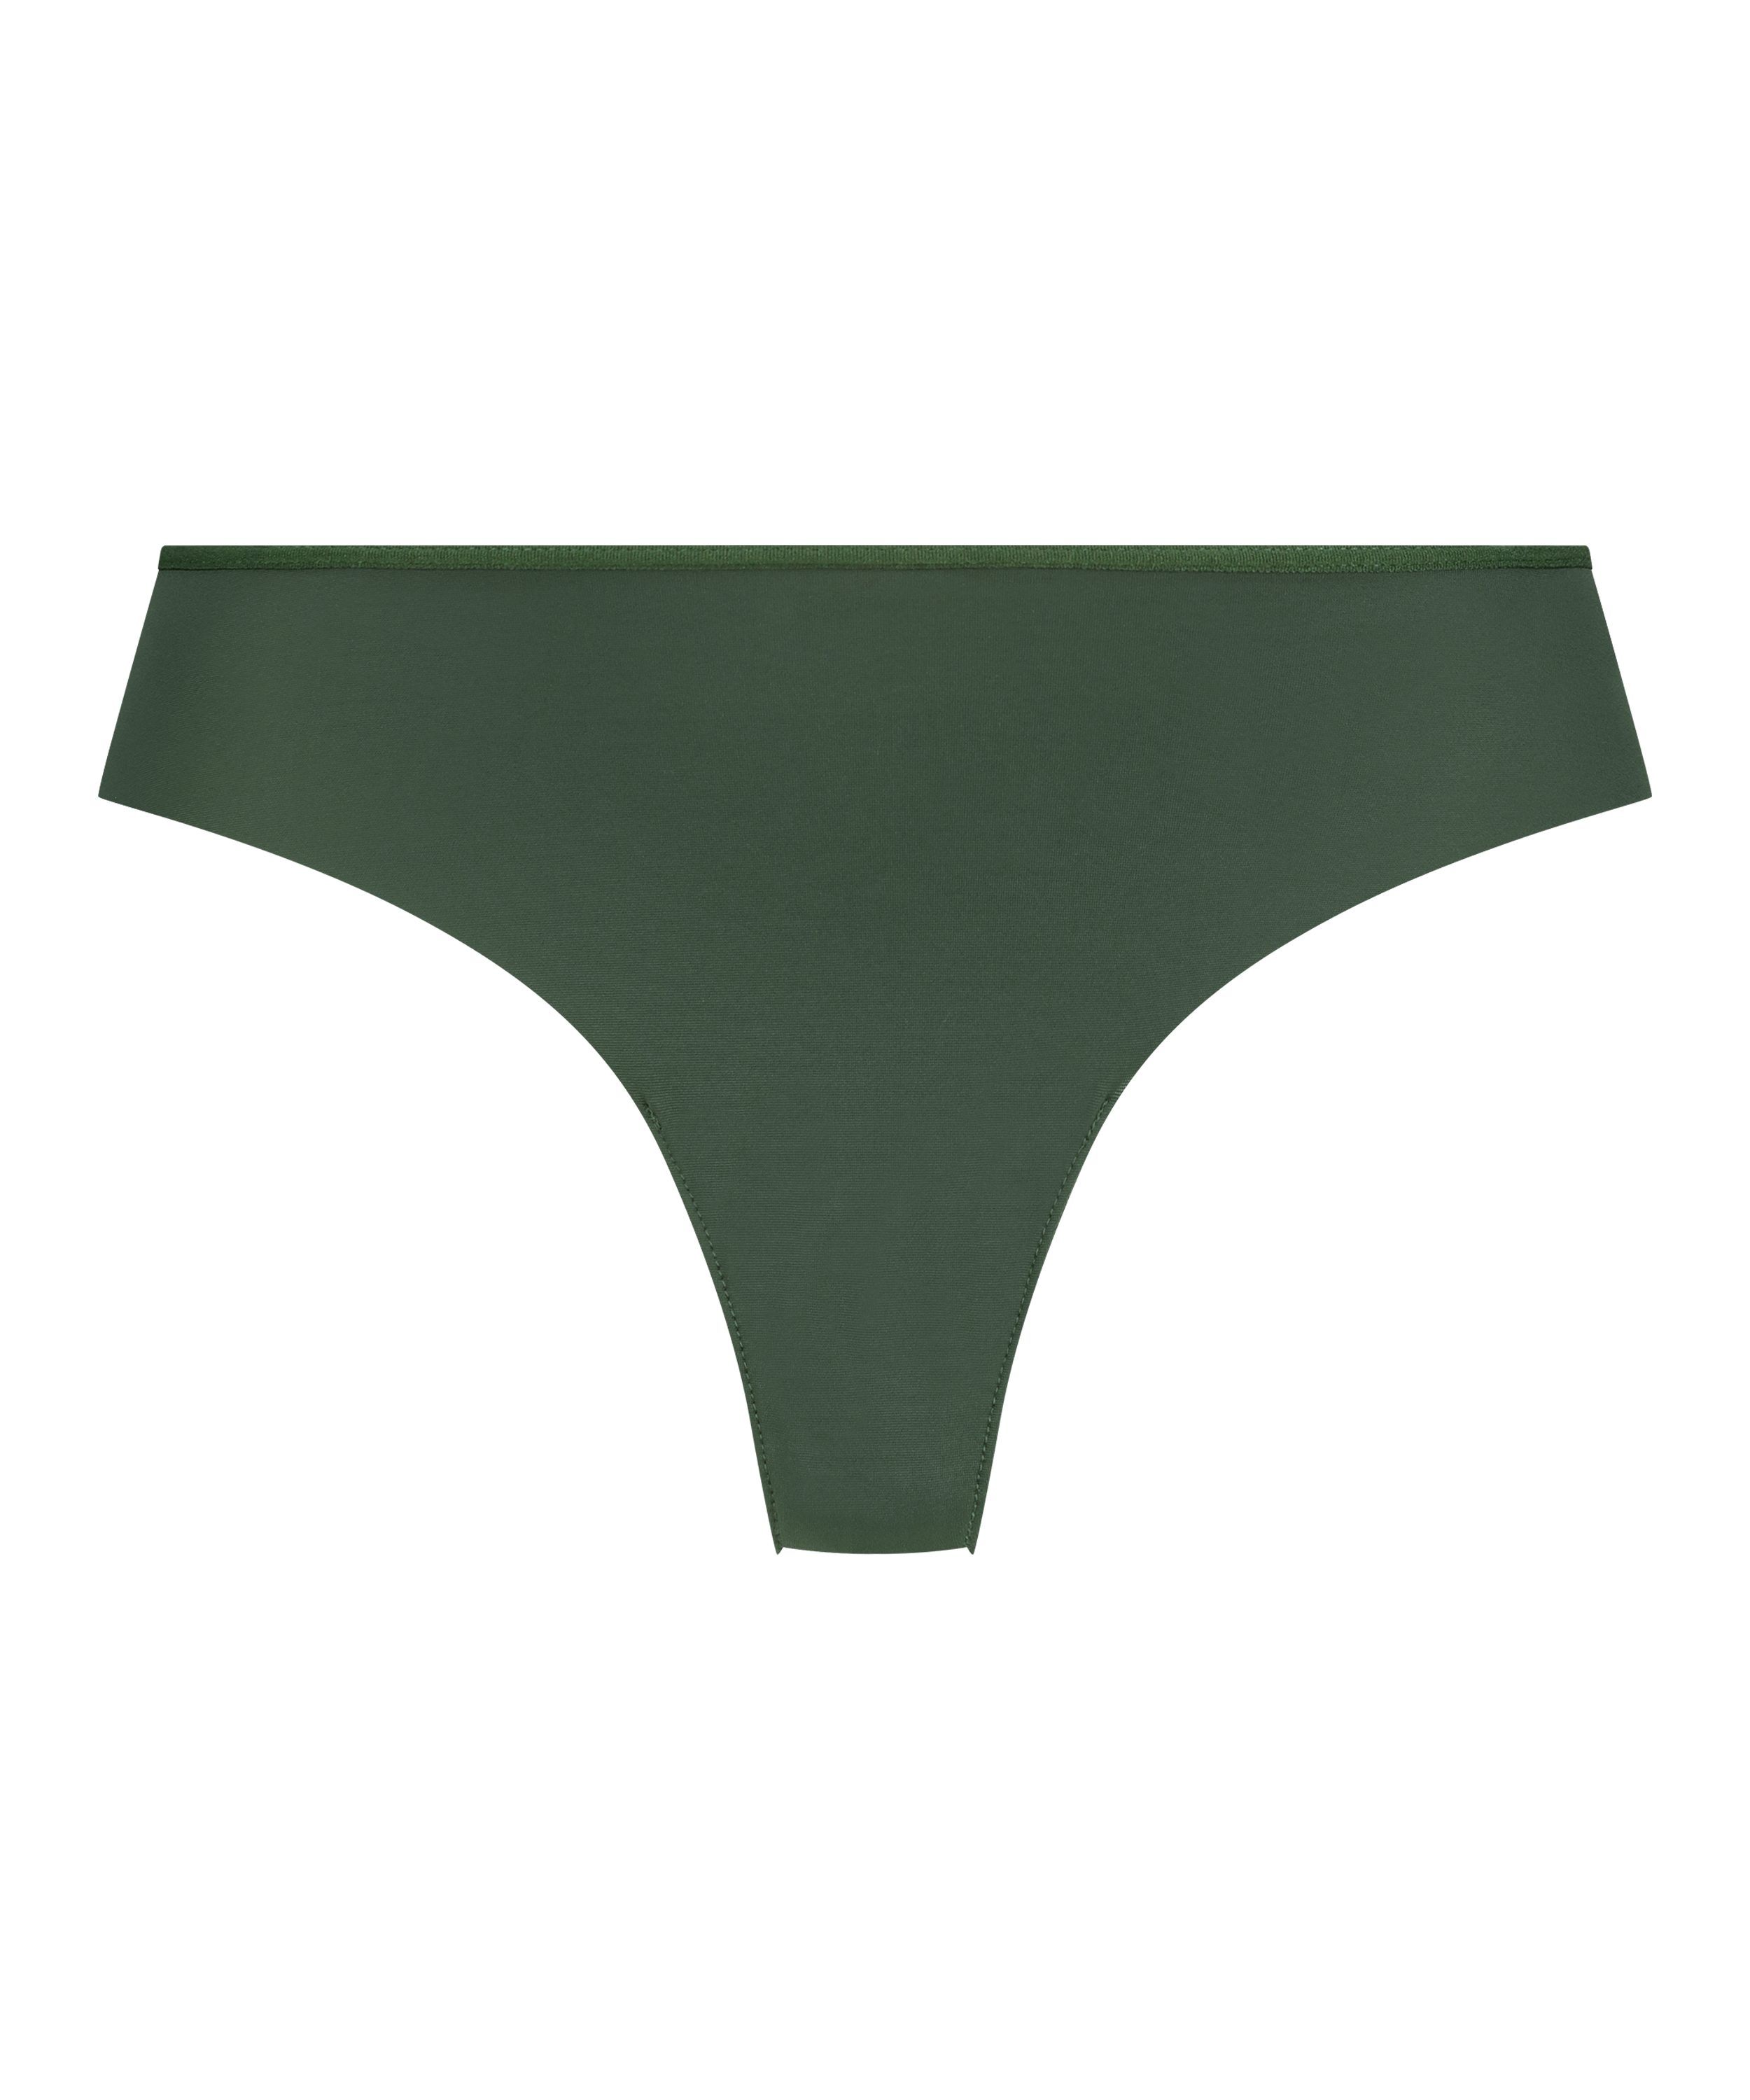 Lace Back Invisible Thong, Green, main